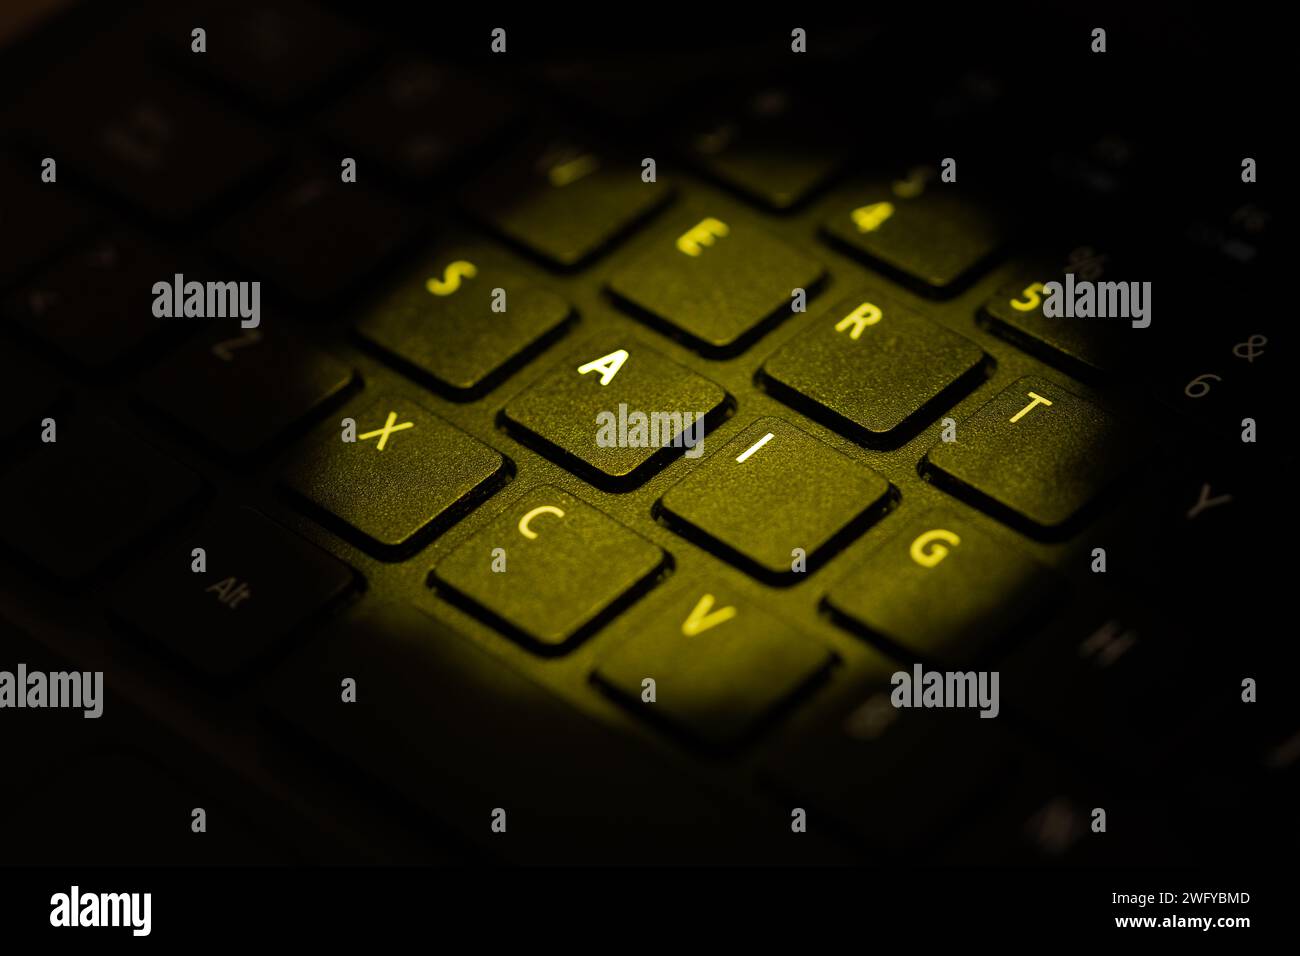 teclado iluminado con luz amarilla destacando letras a i. Foto de stock